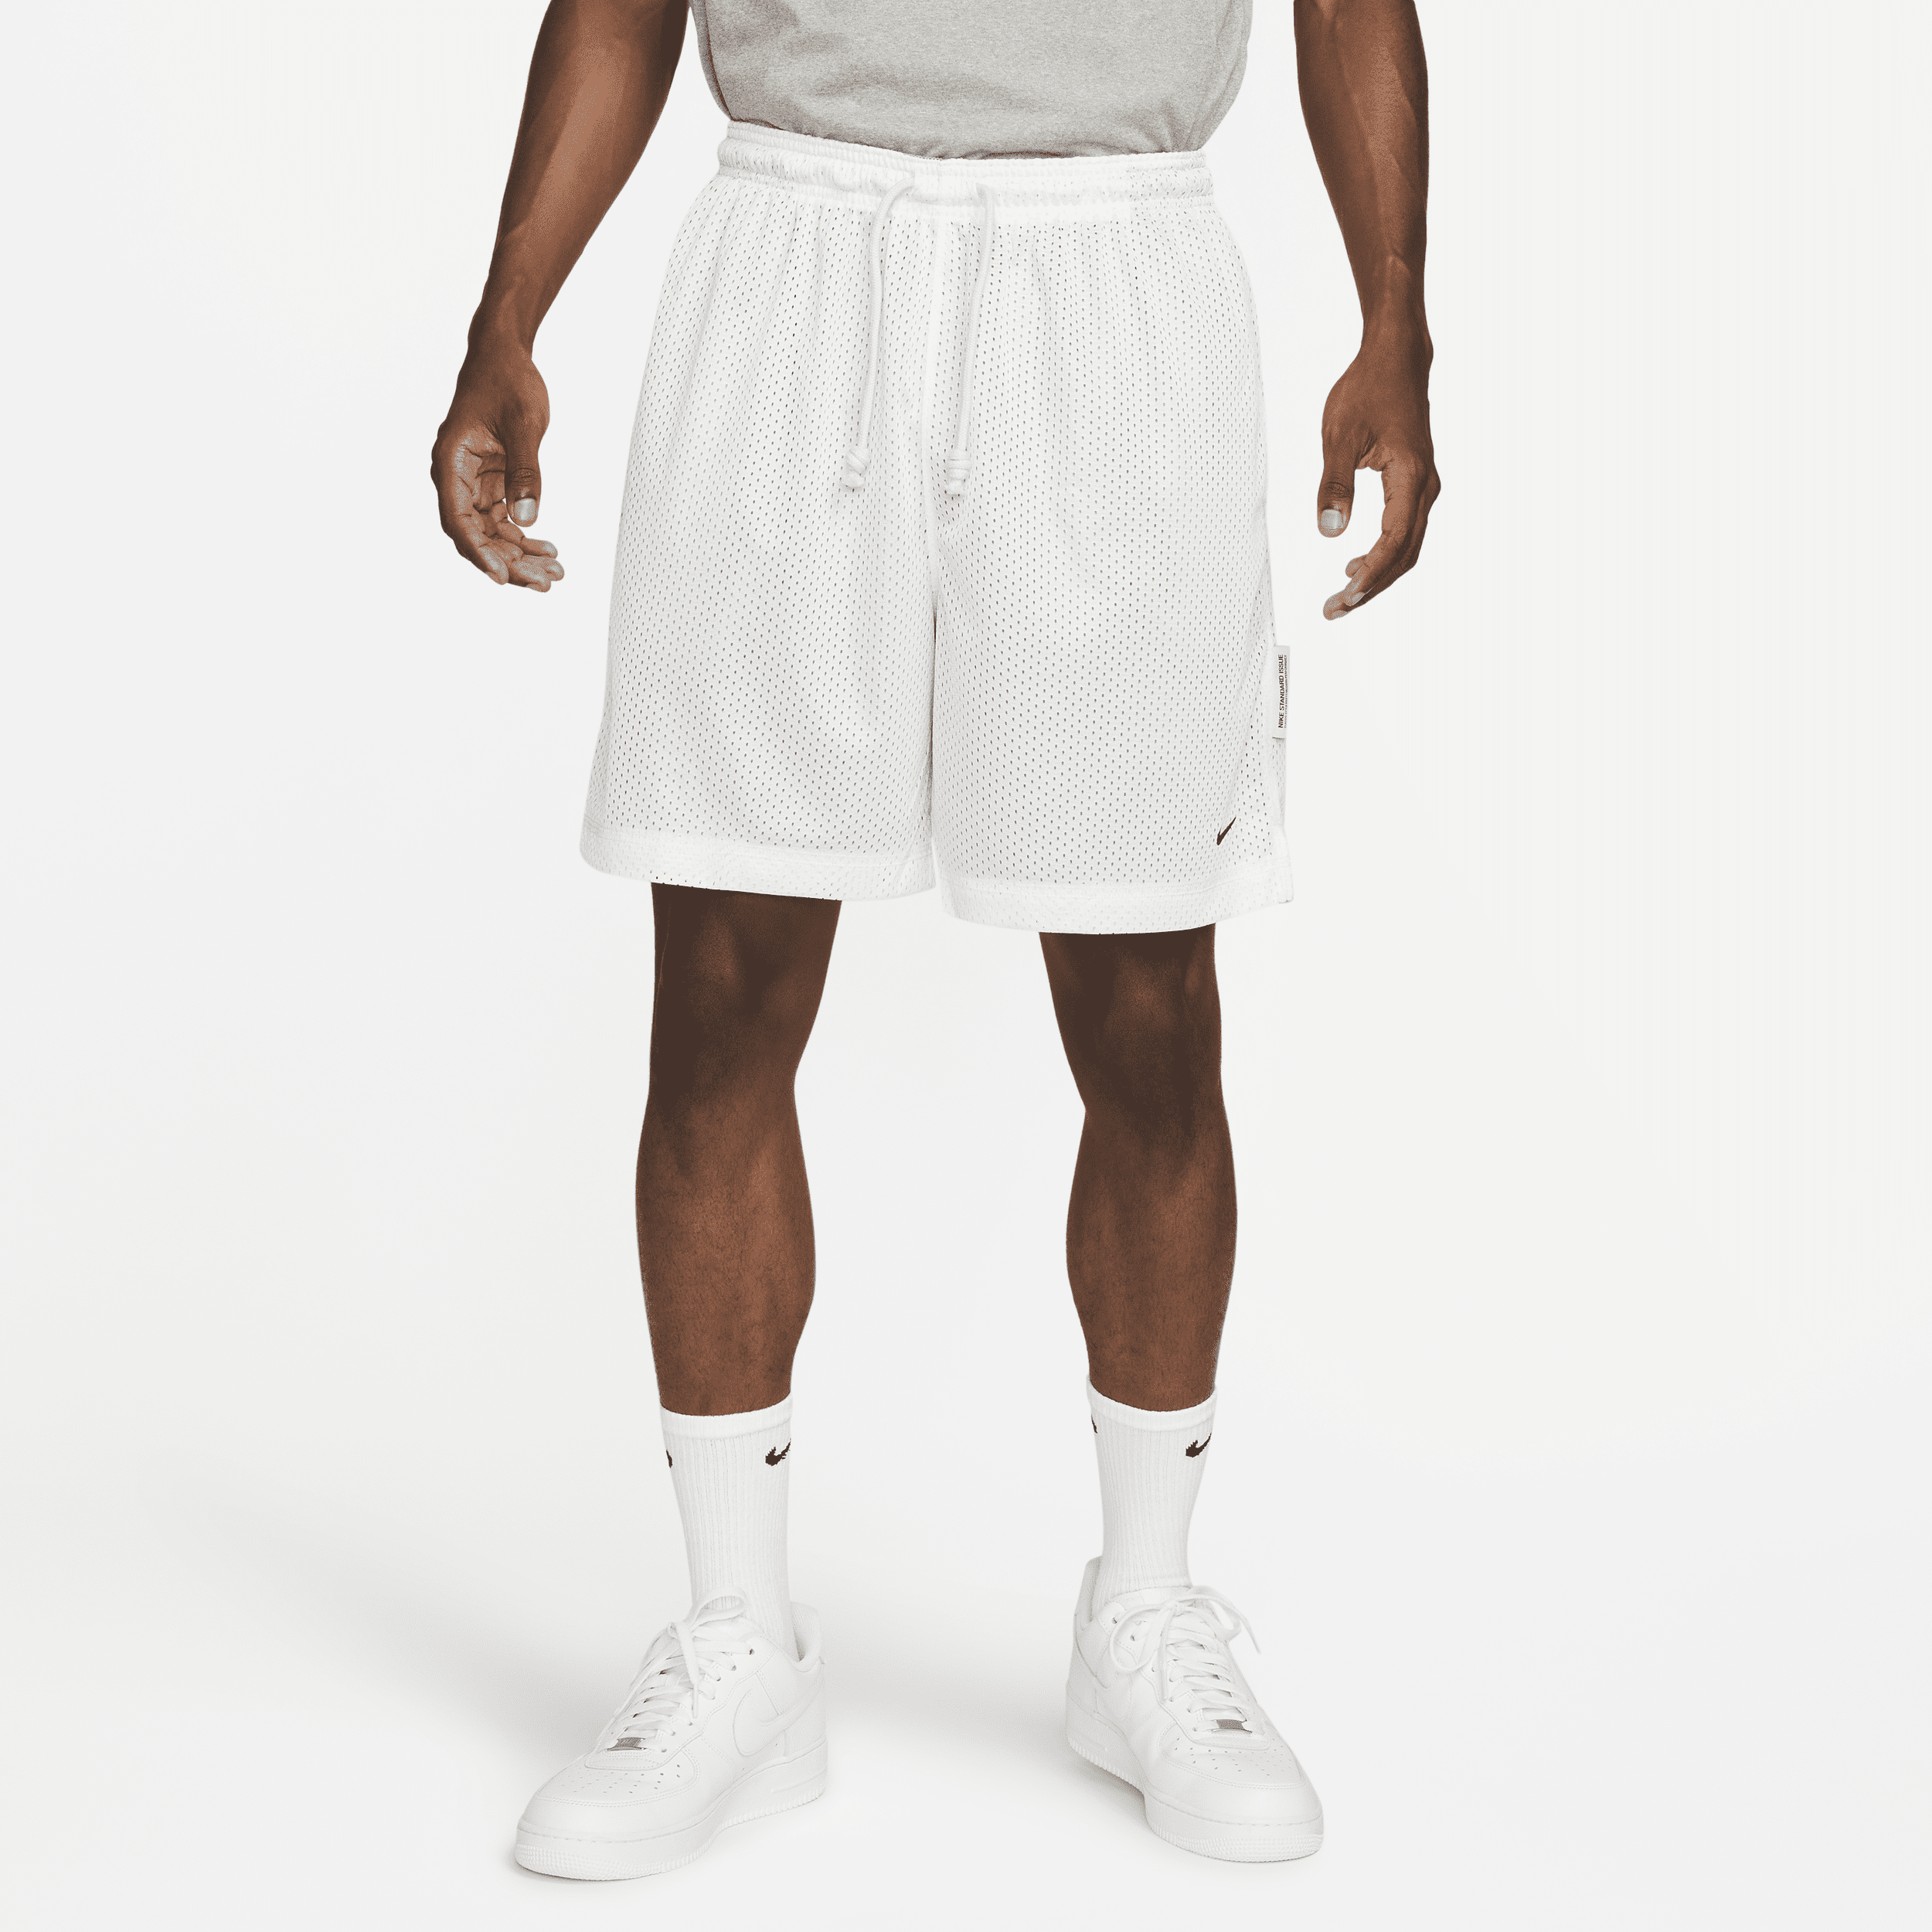 Nike Dri-FIT Standard Issue Men's Reversible 6 Basketball Shorts